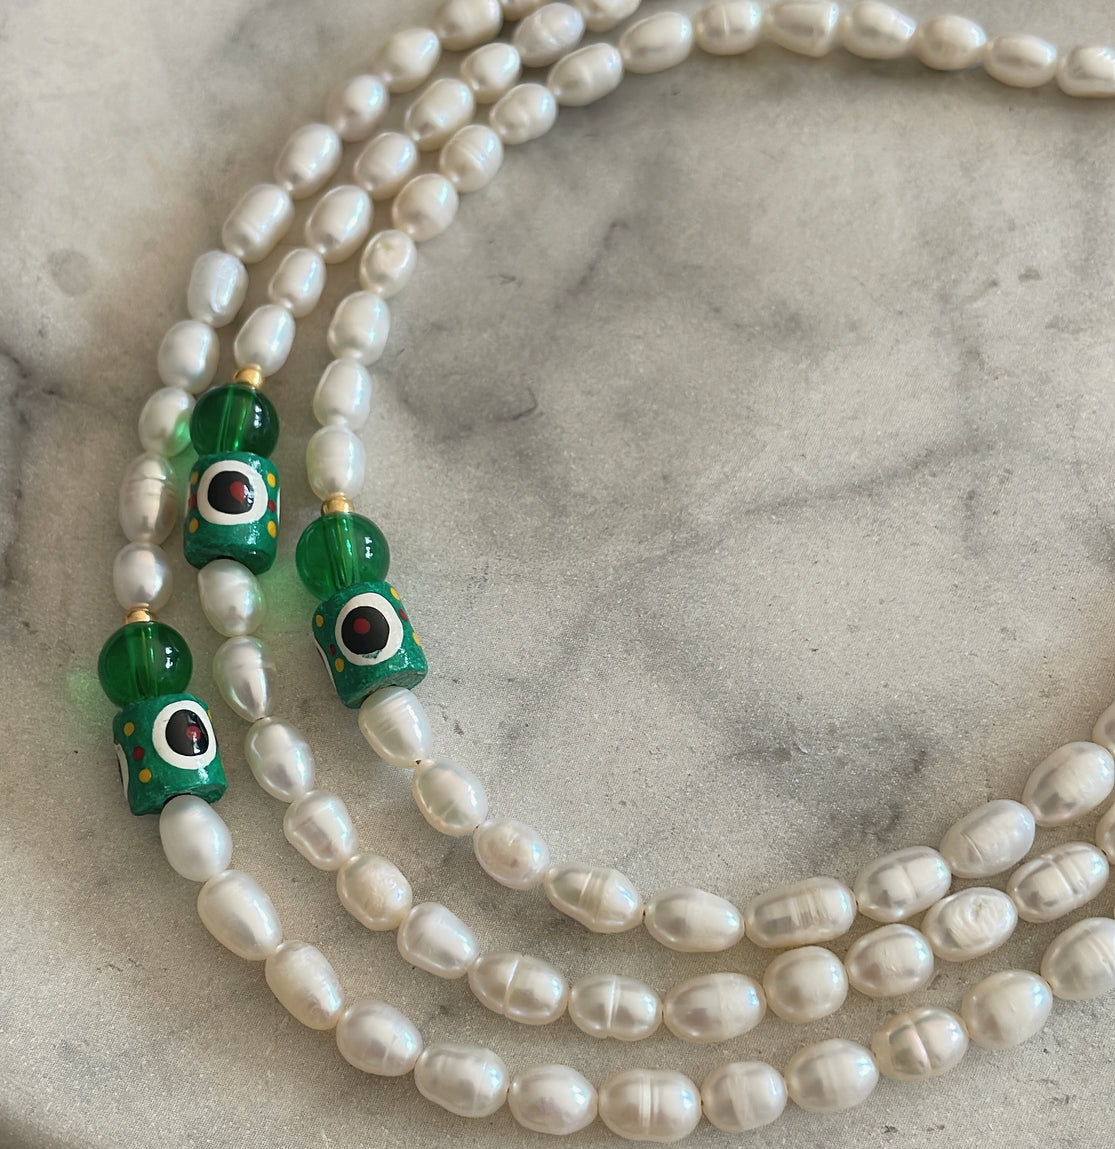 ‘GREEN EYE’ necklace